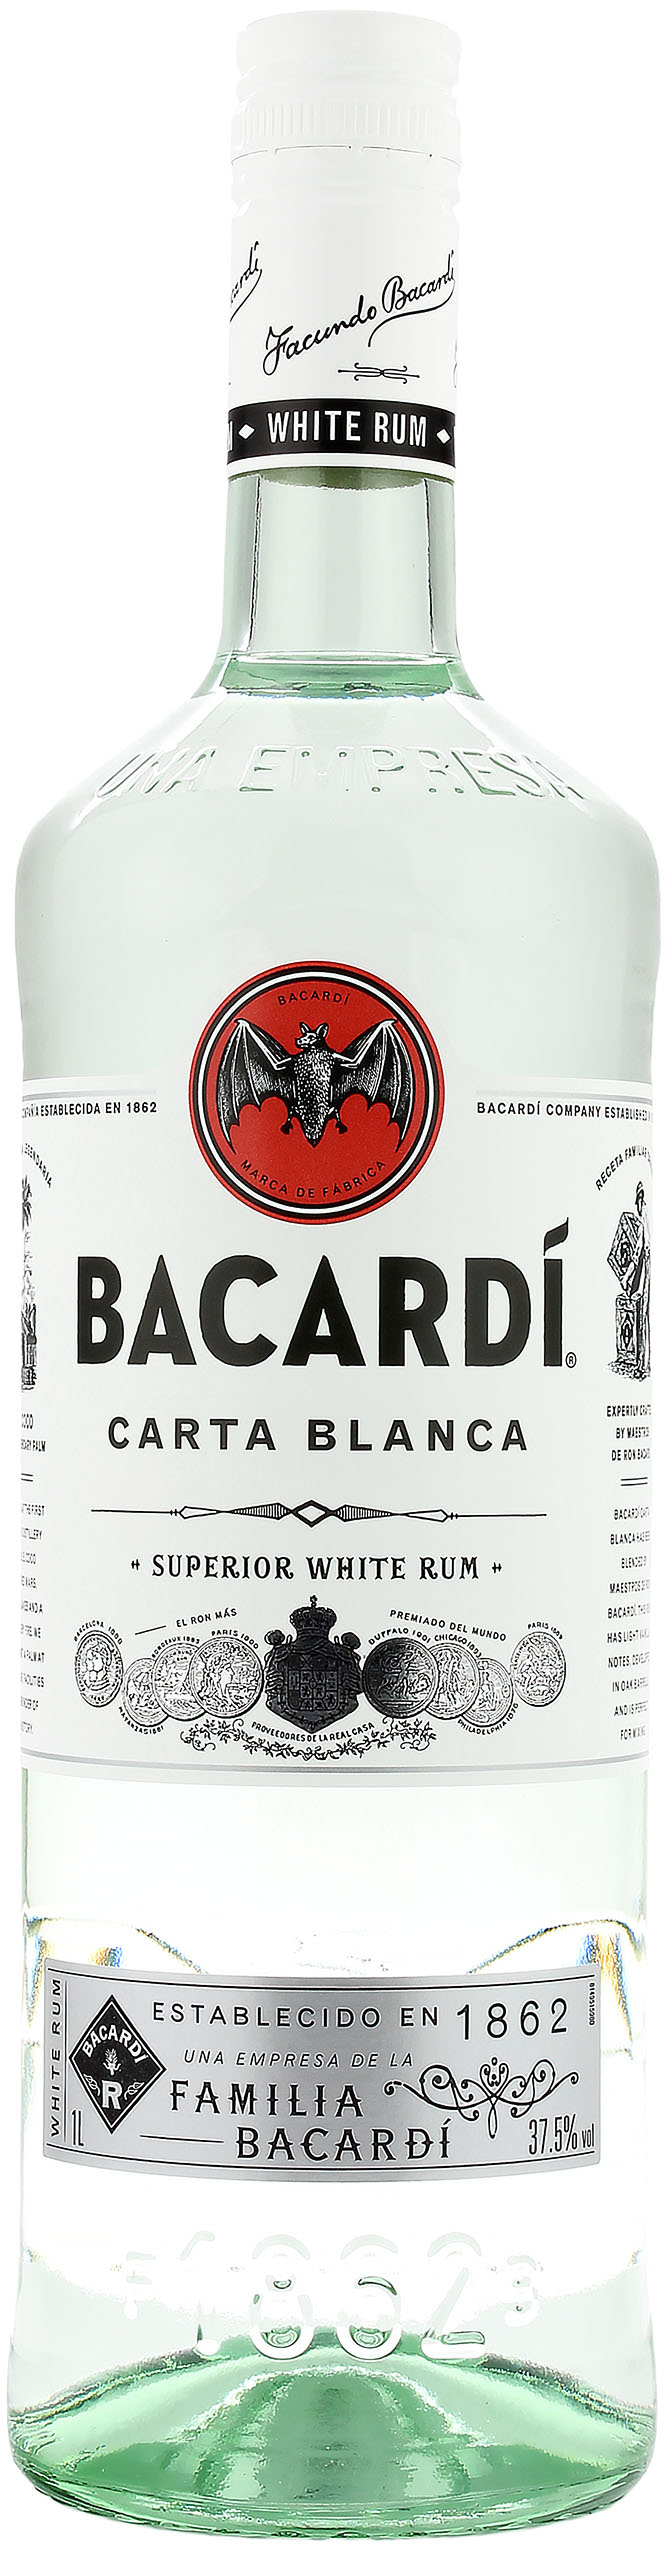 Bacardi Carta Blanca 37.5% 1 Liter